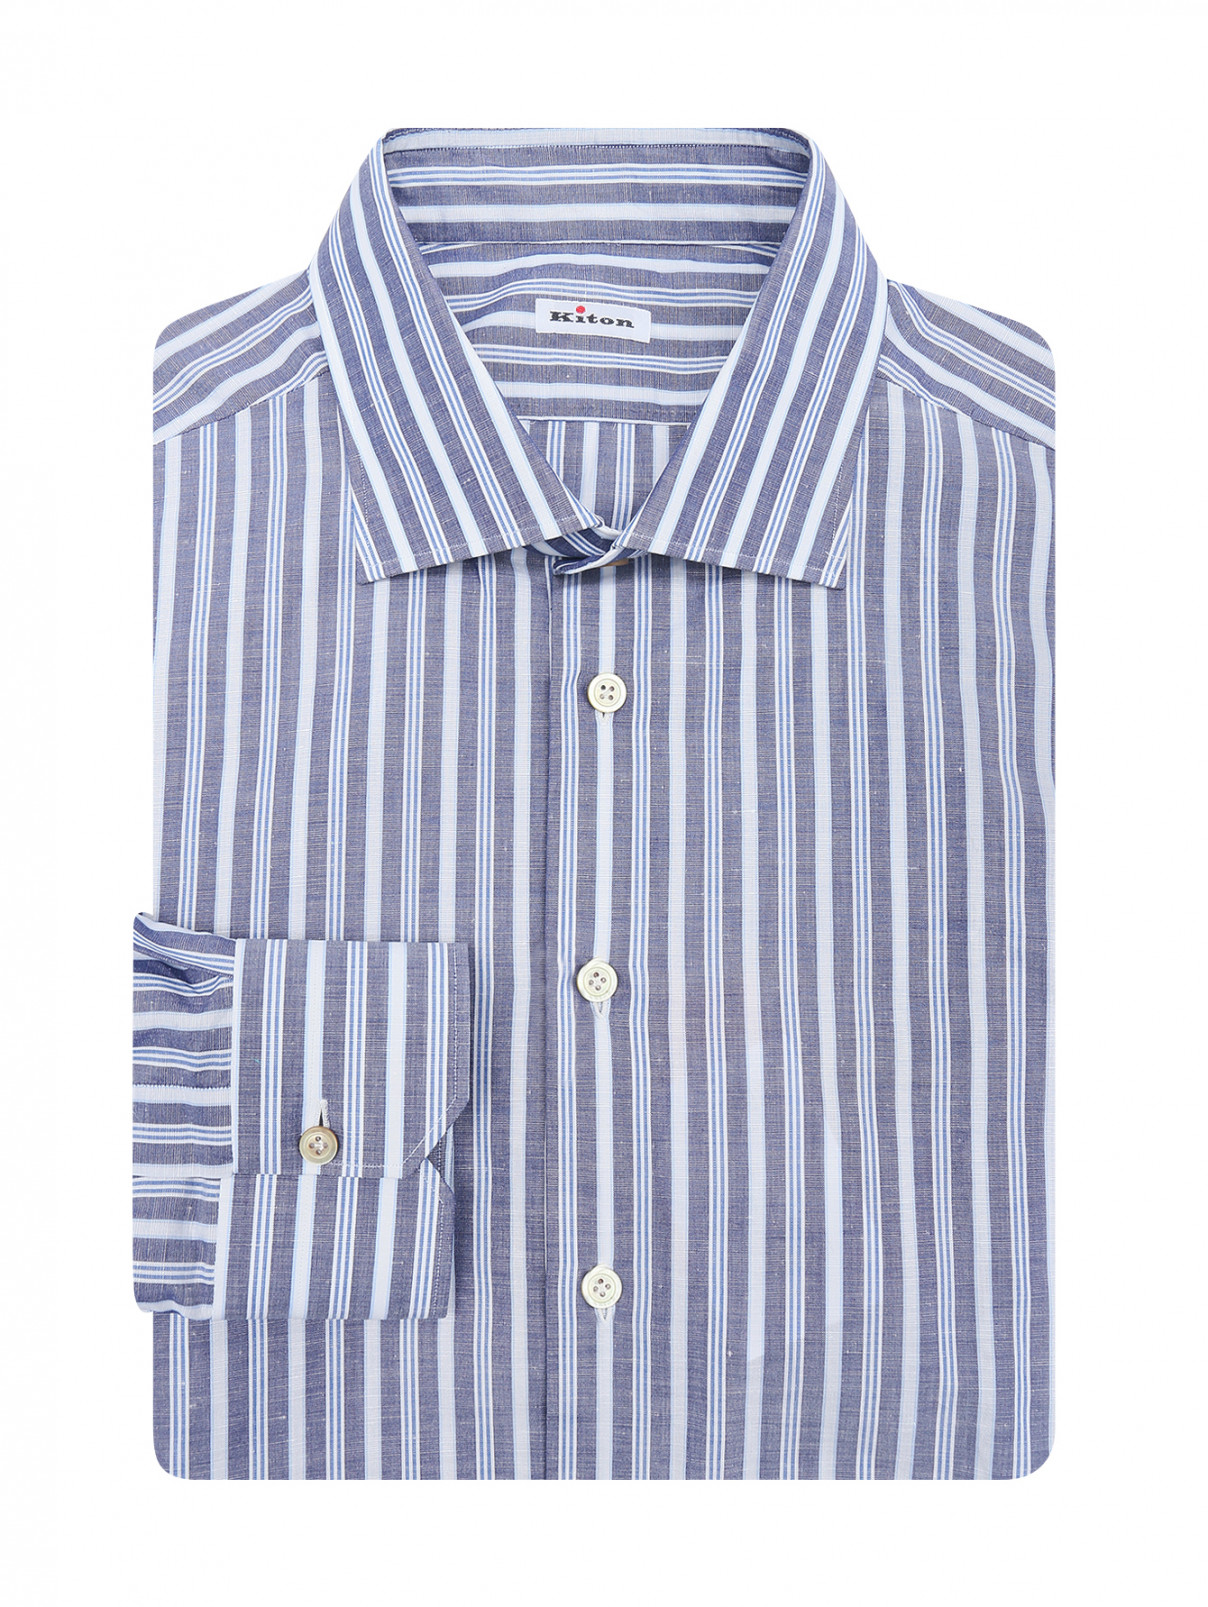 Рубашка из хлопка с узором Kiton  –  Общий вид  – Цвет:  Синий